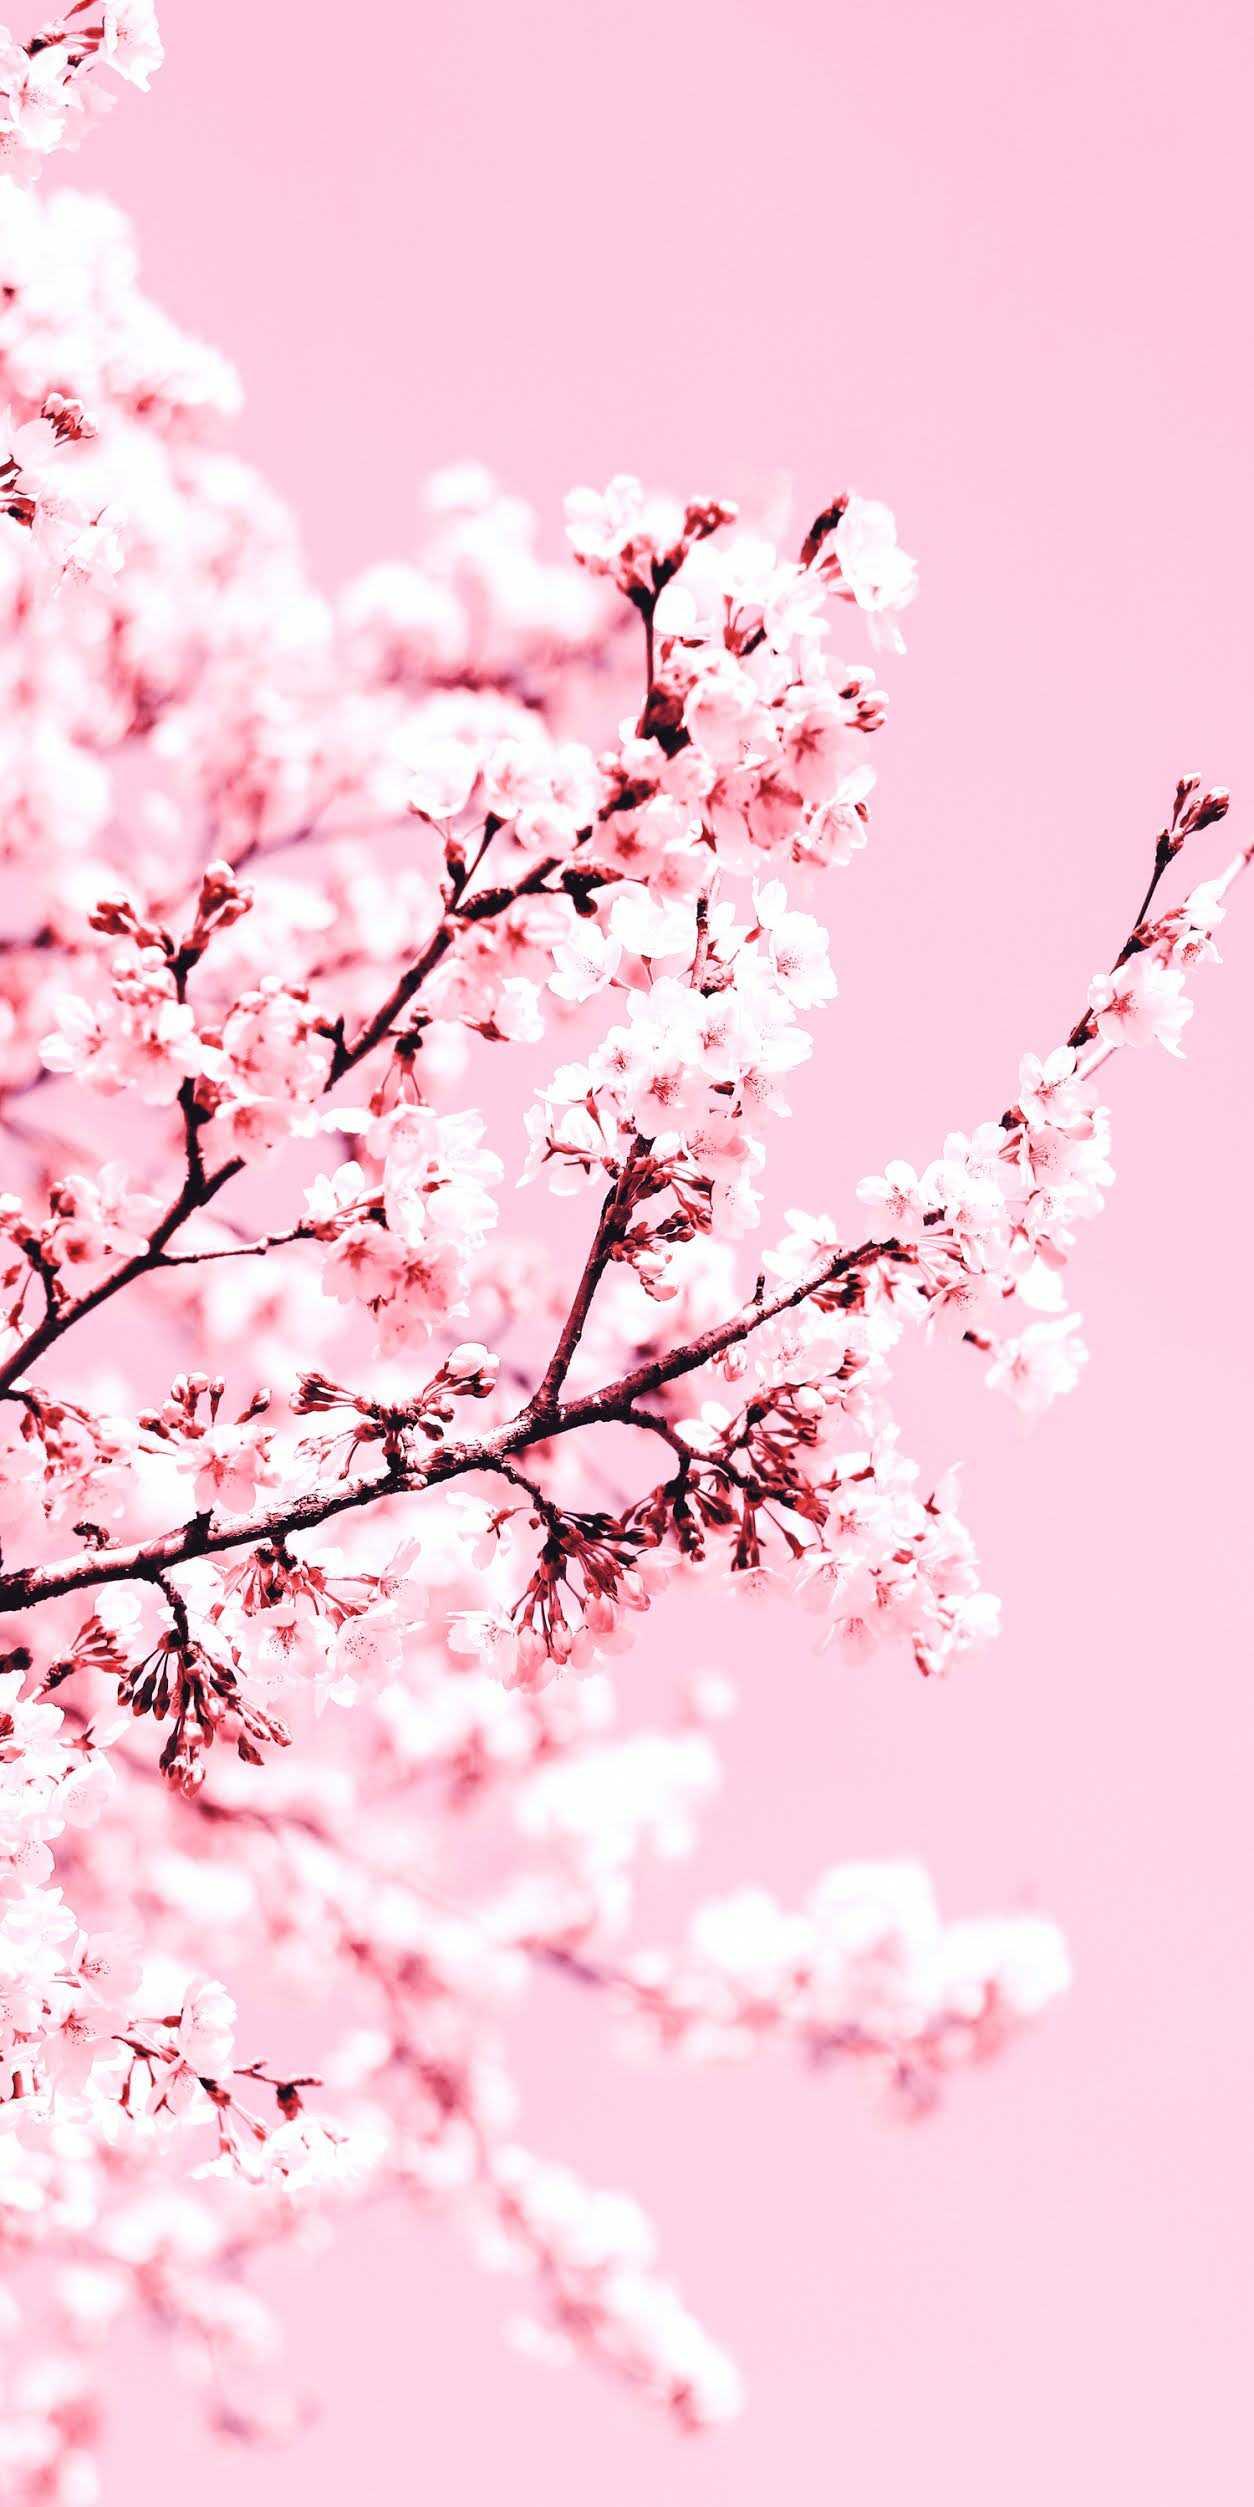 3840x2160px  free download  HD wallpaper Anime Original Braid Cape Cherry  Blossom L  Cute laptop wallpaper Anime scenery wallpaper Pink wallpaper  laptop